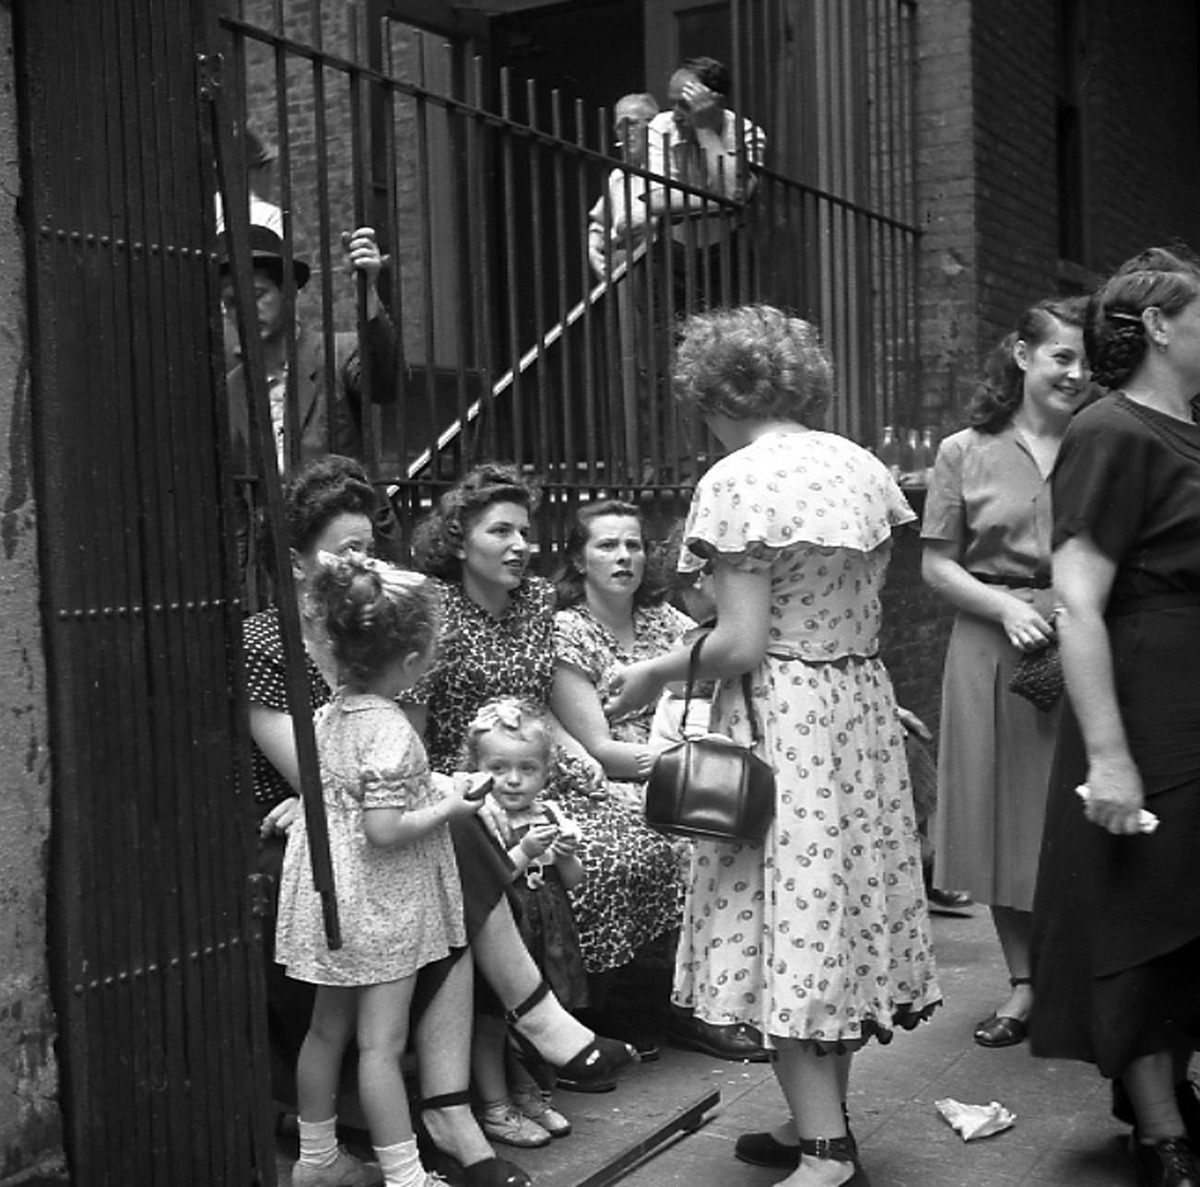 Women at Gate, New York, c. 1946-1950